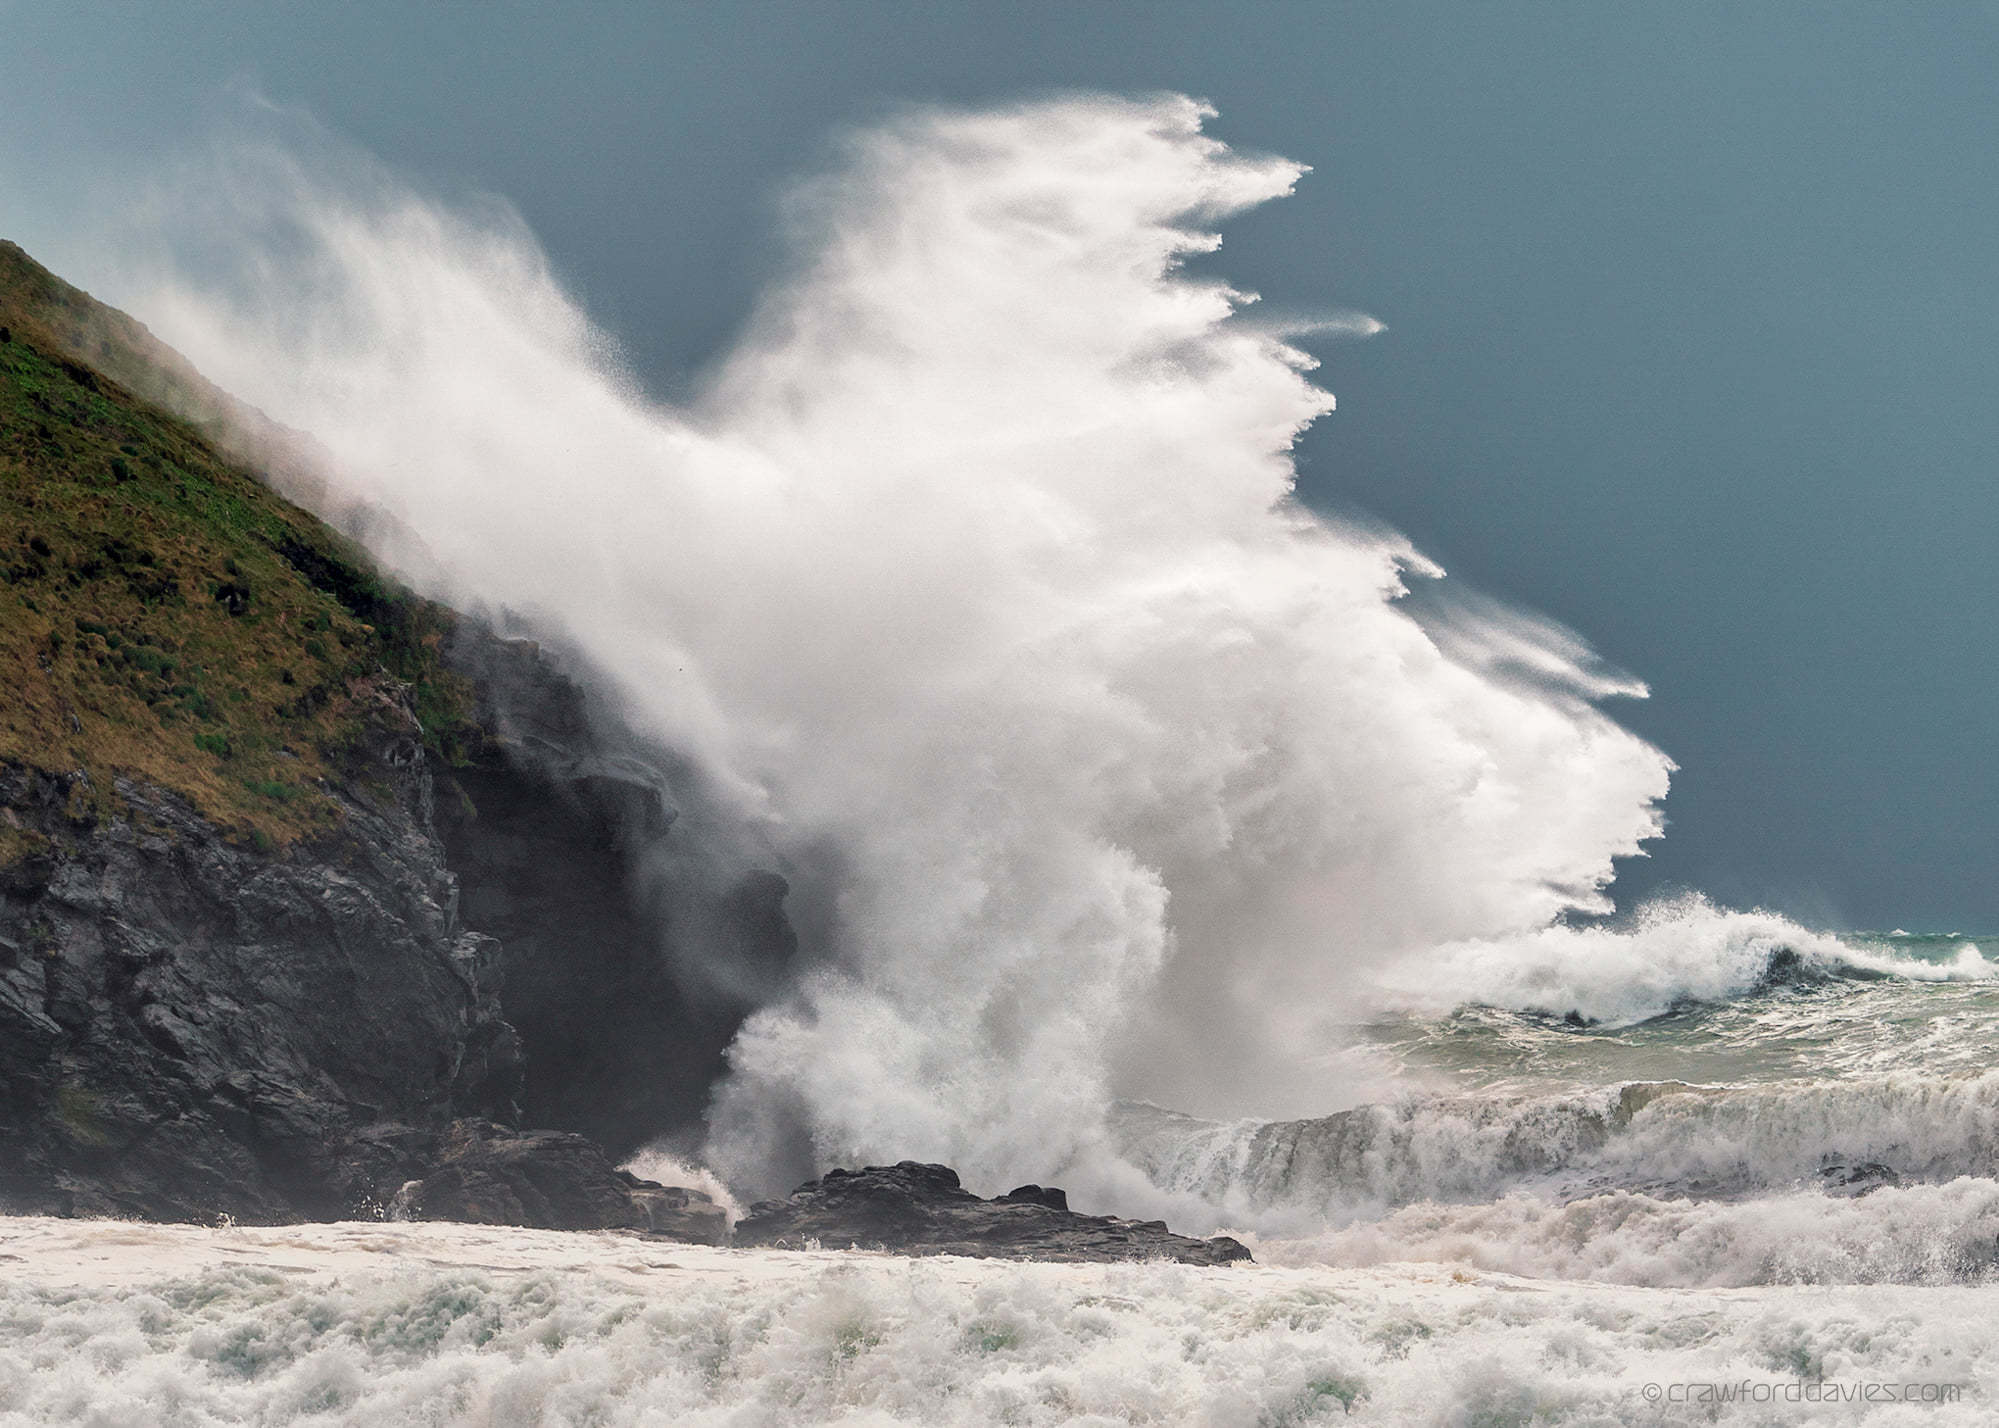 Waves crashing in at Poldhu this afternoon, by Stephen Crawford Davies